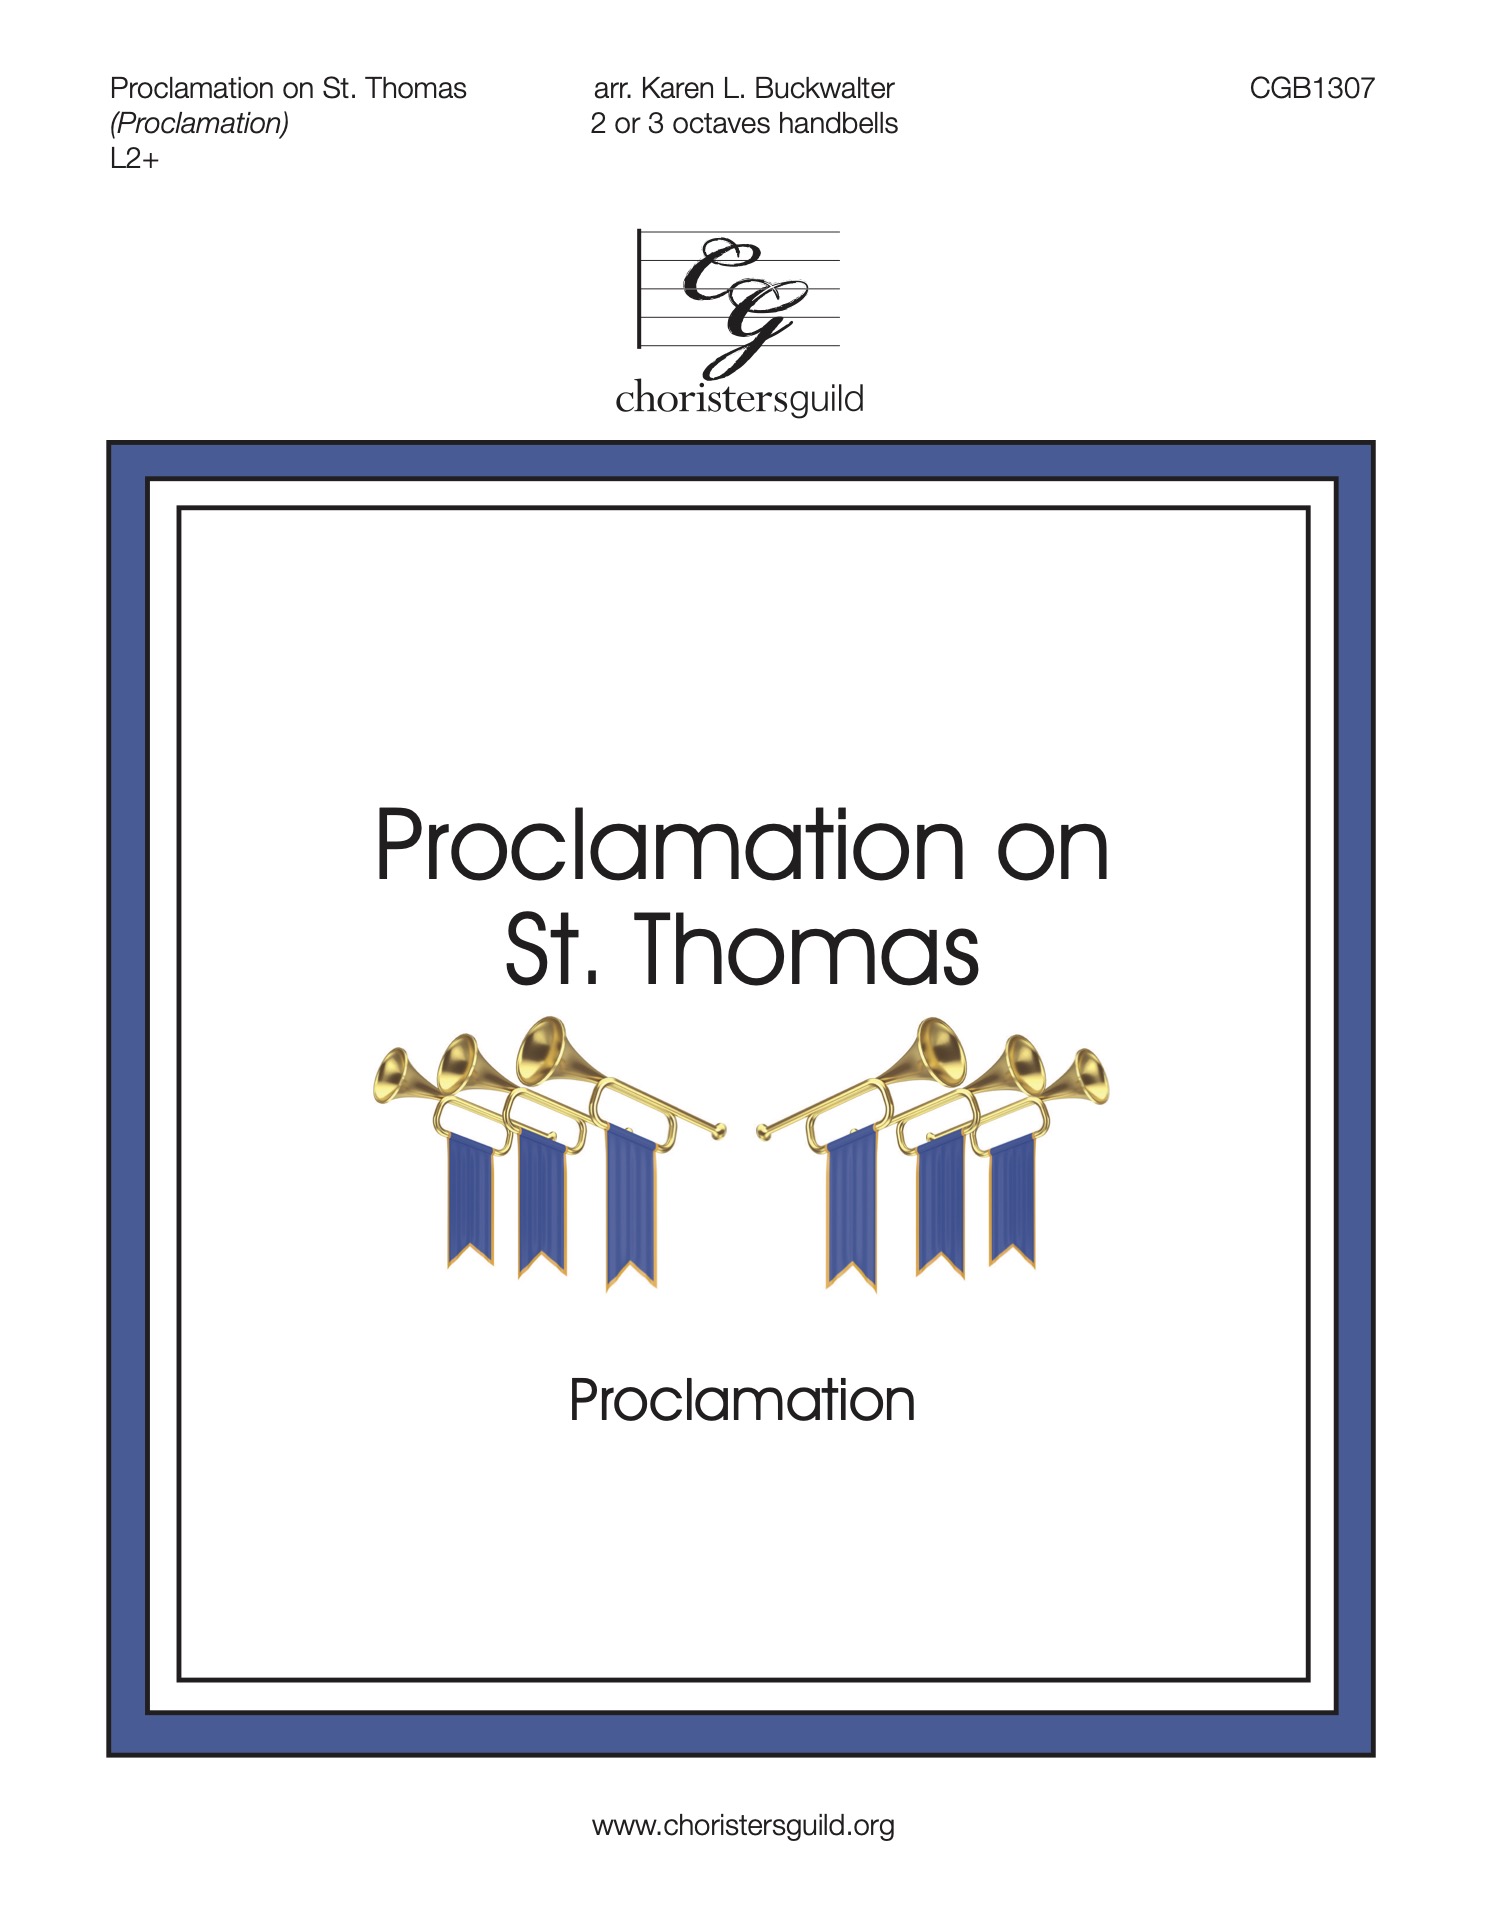 Proclamation on St. Thomas (2-3 octaves)